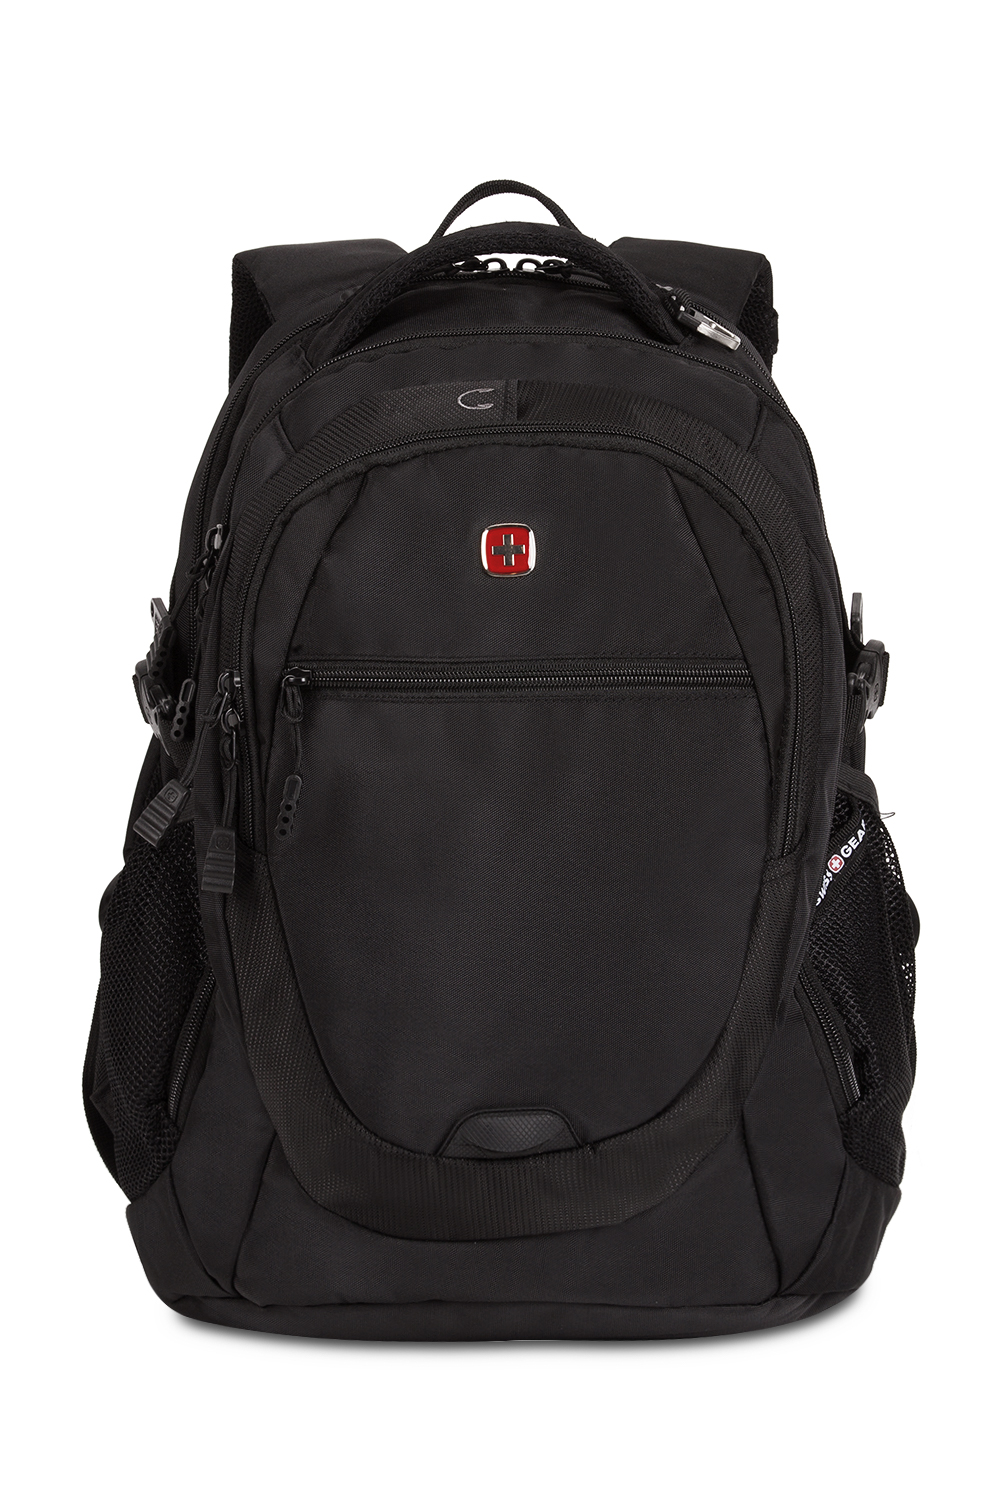 Unisex Backpacks SWISSGEAR Laptop Pack Business Bags School Rucksack Satchel NEW 